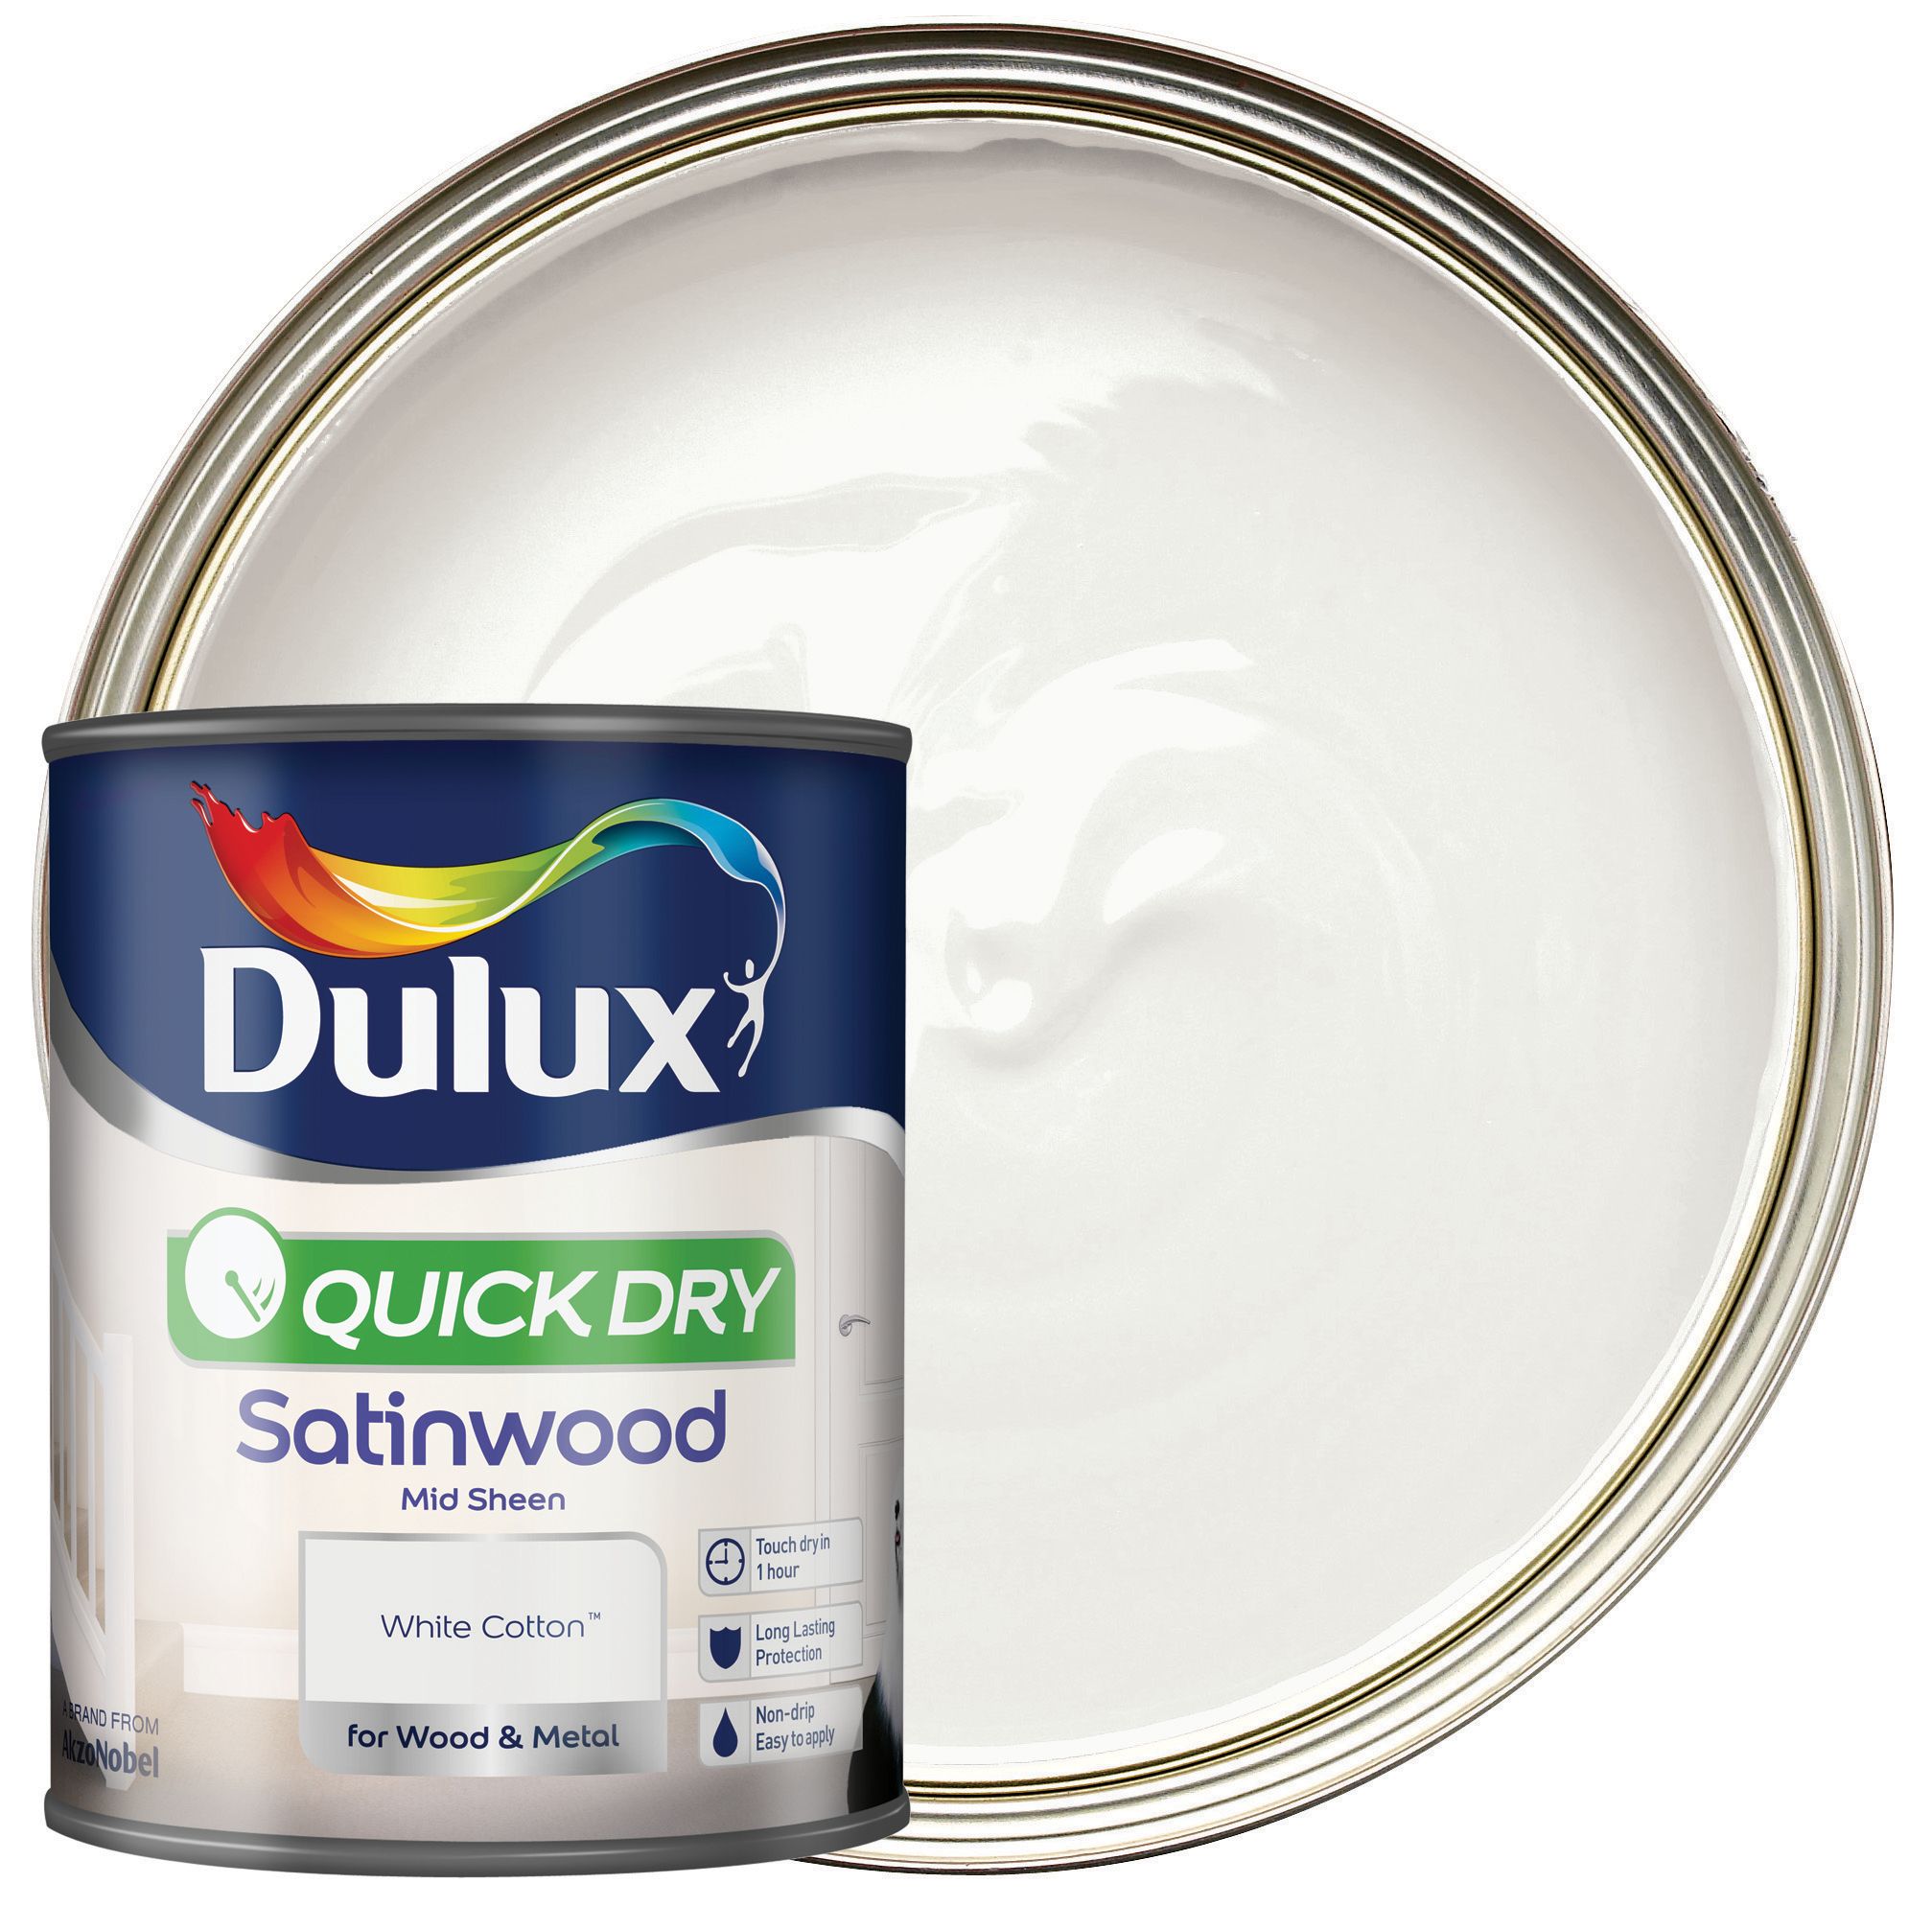 Dulux Quick Dry Satinwood Paint - White Cotton